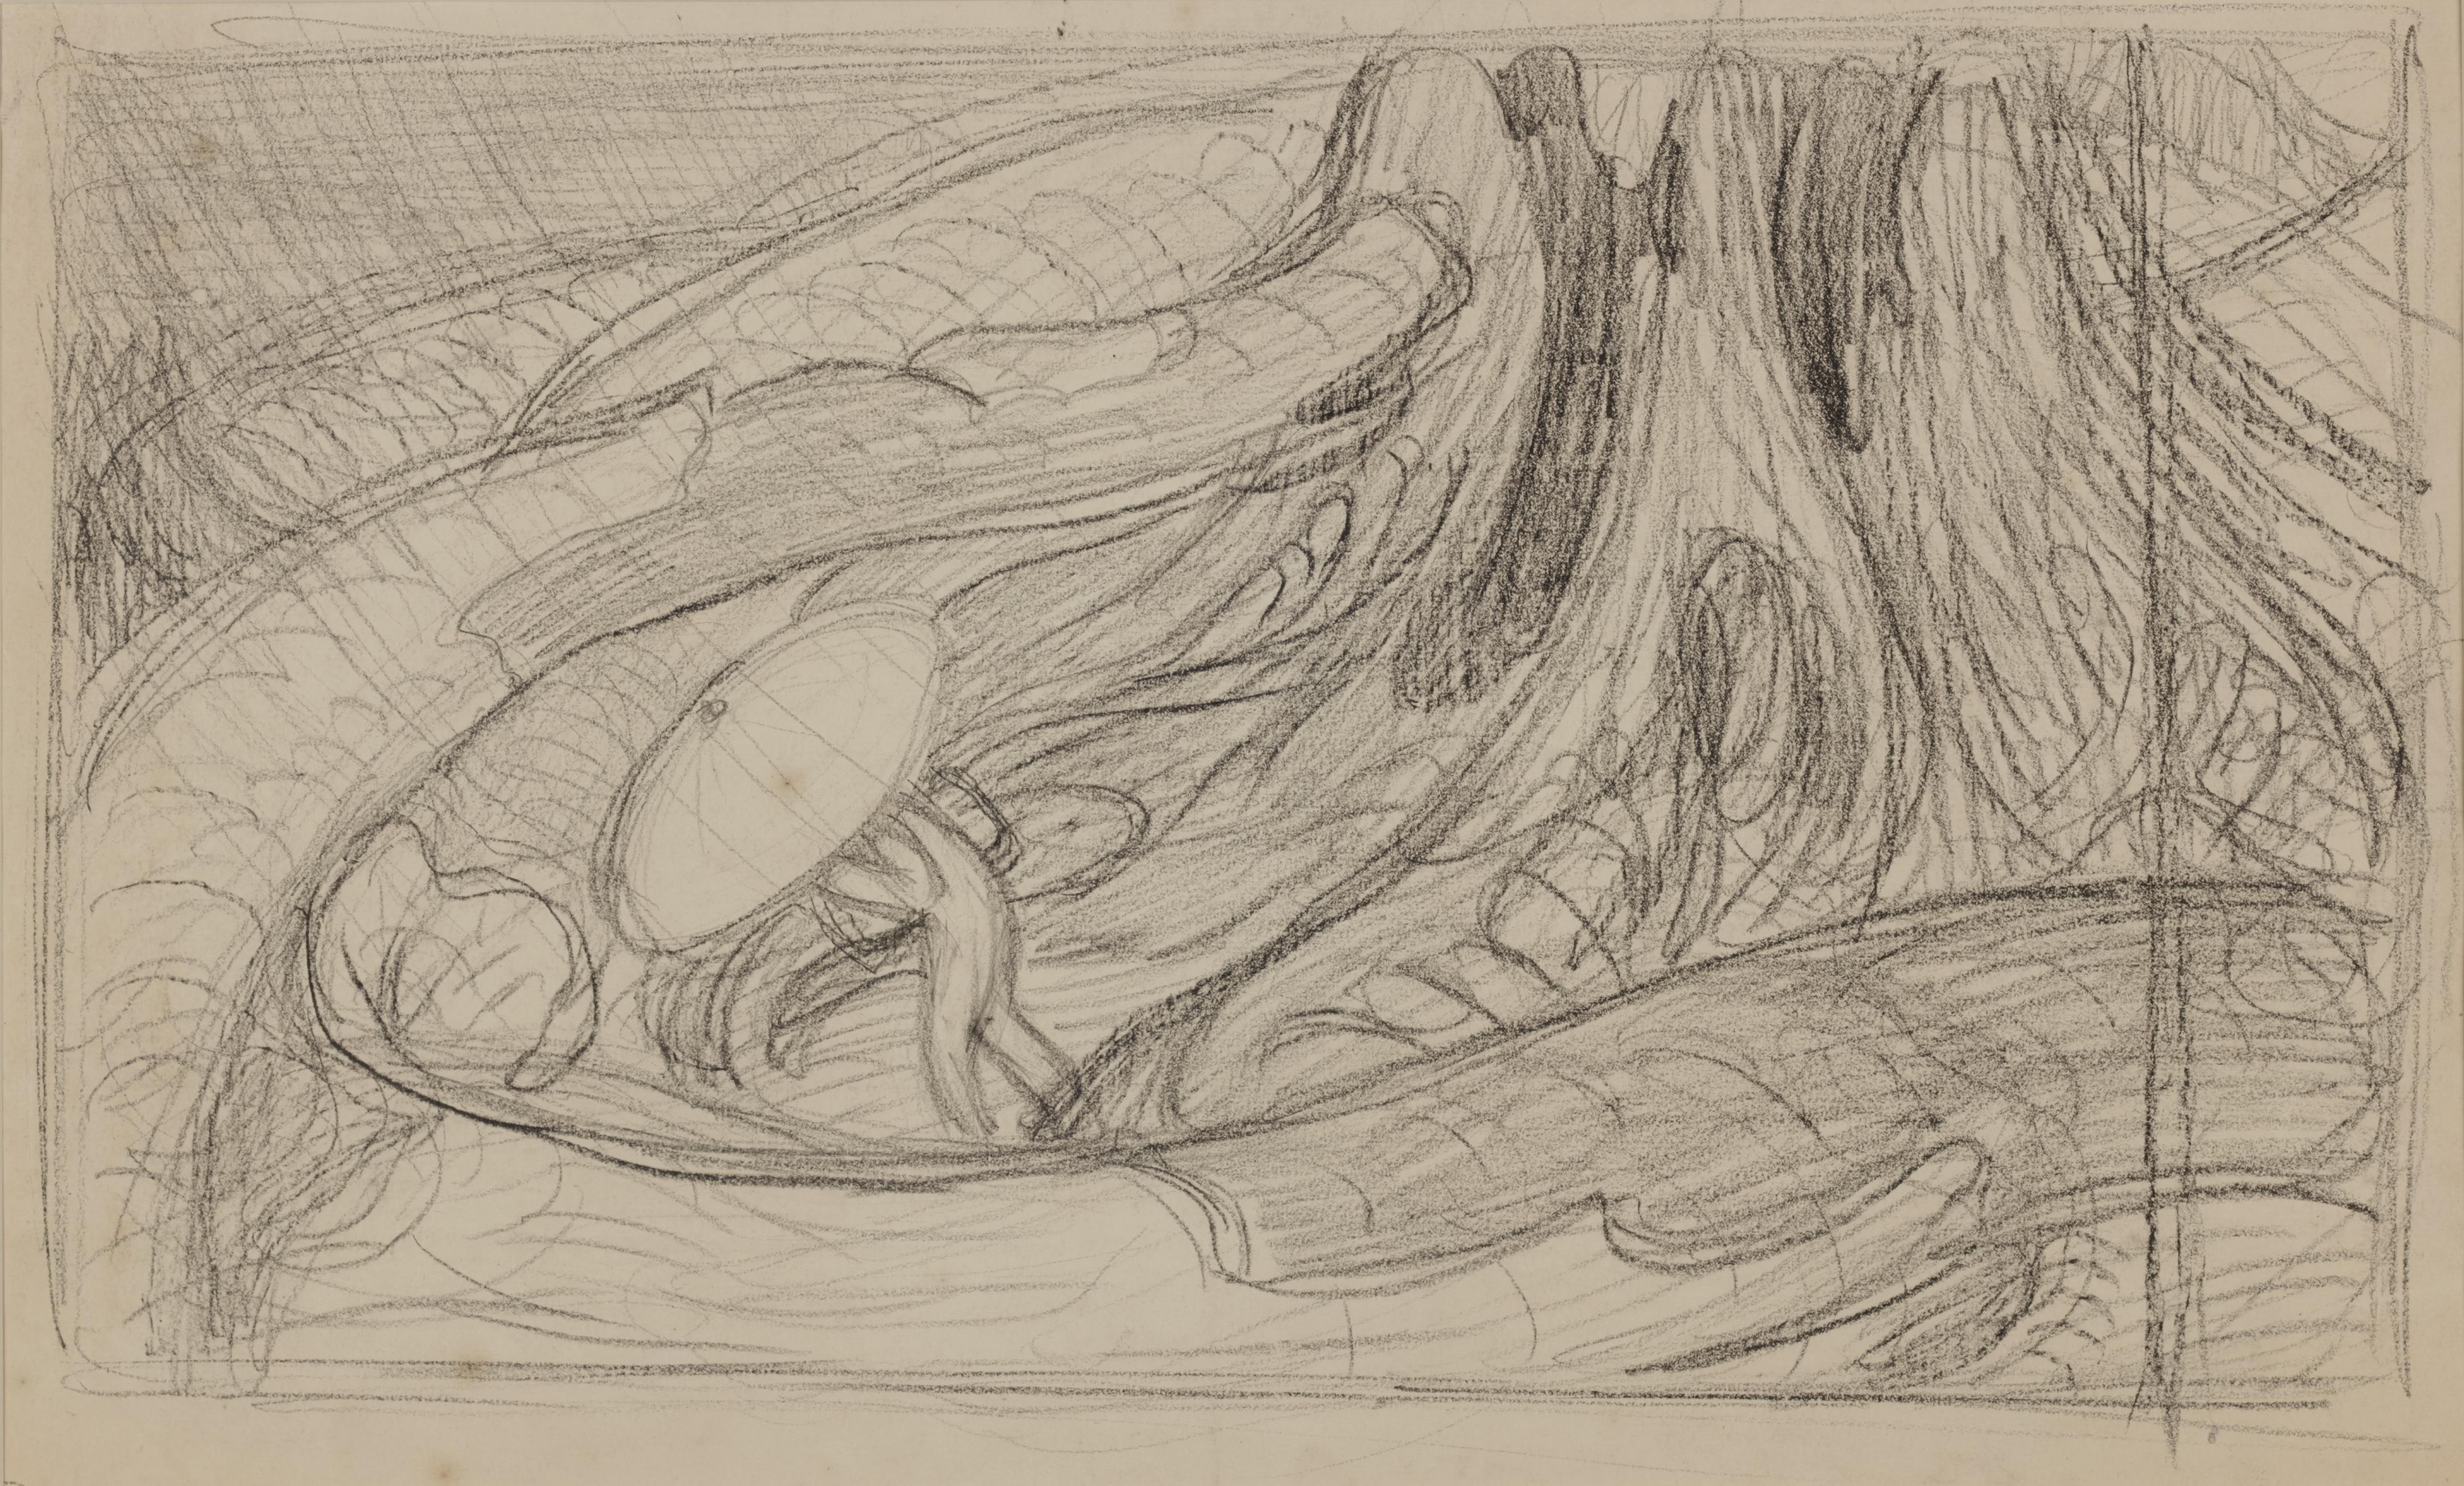 Weltevreden, Kebon Sirih, & Vlucht Voor de bui (Fleeing the rain)  - Art nouveau Art par W.O.J. Nieuwenkamp